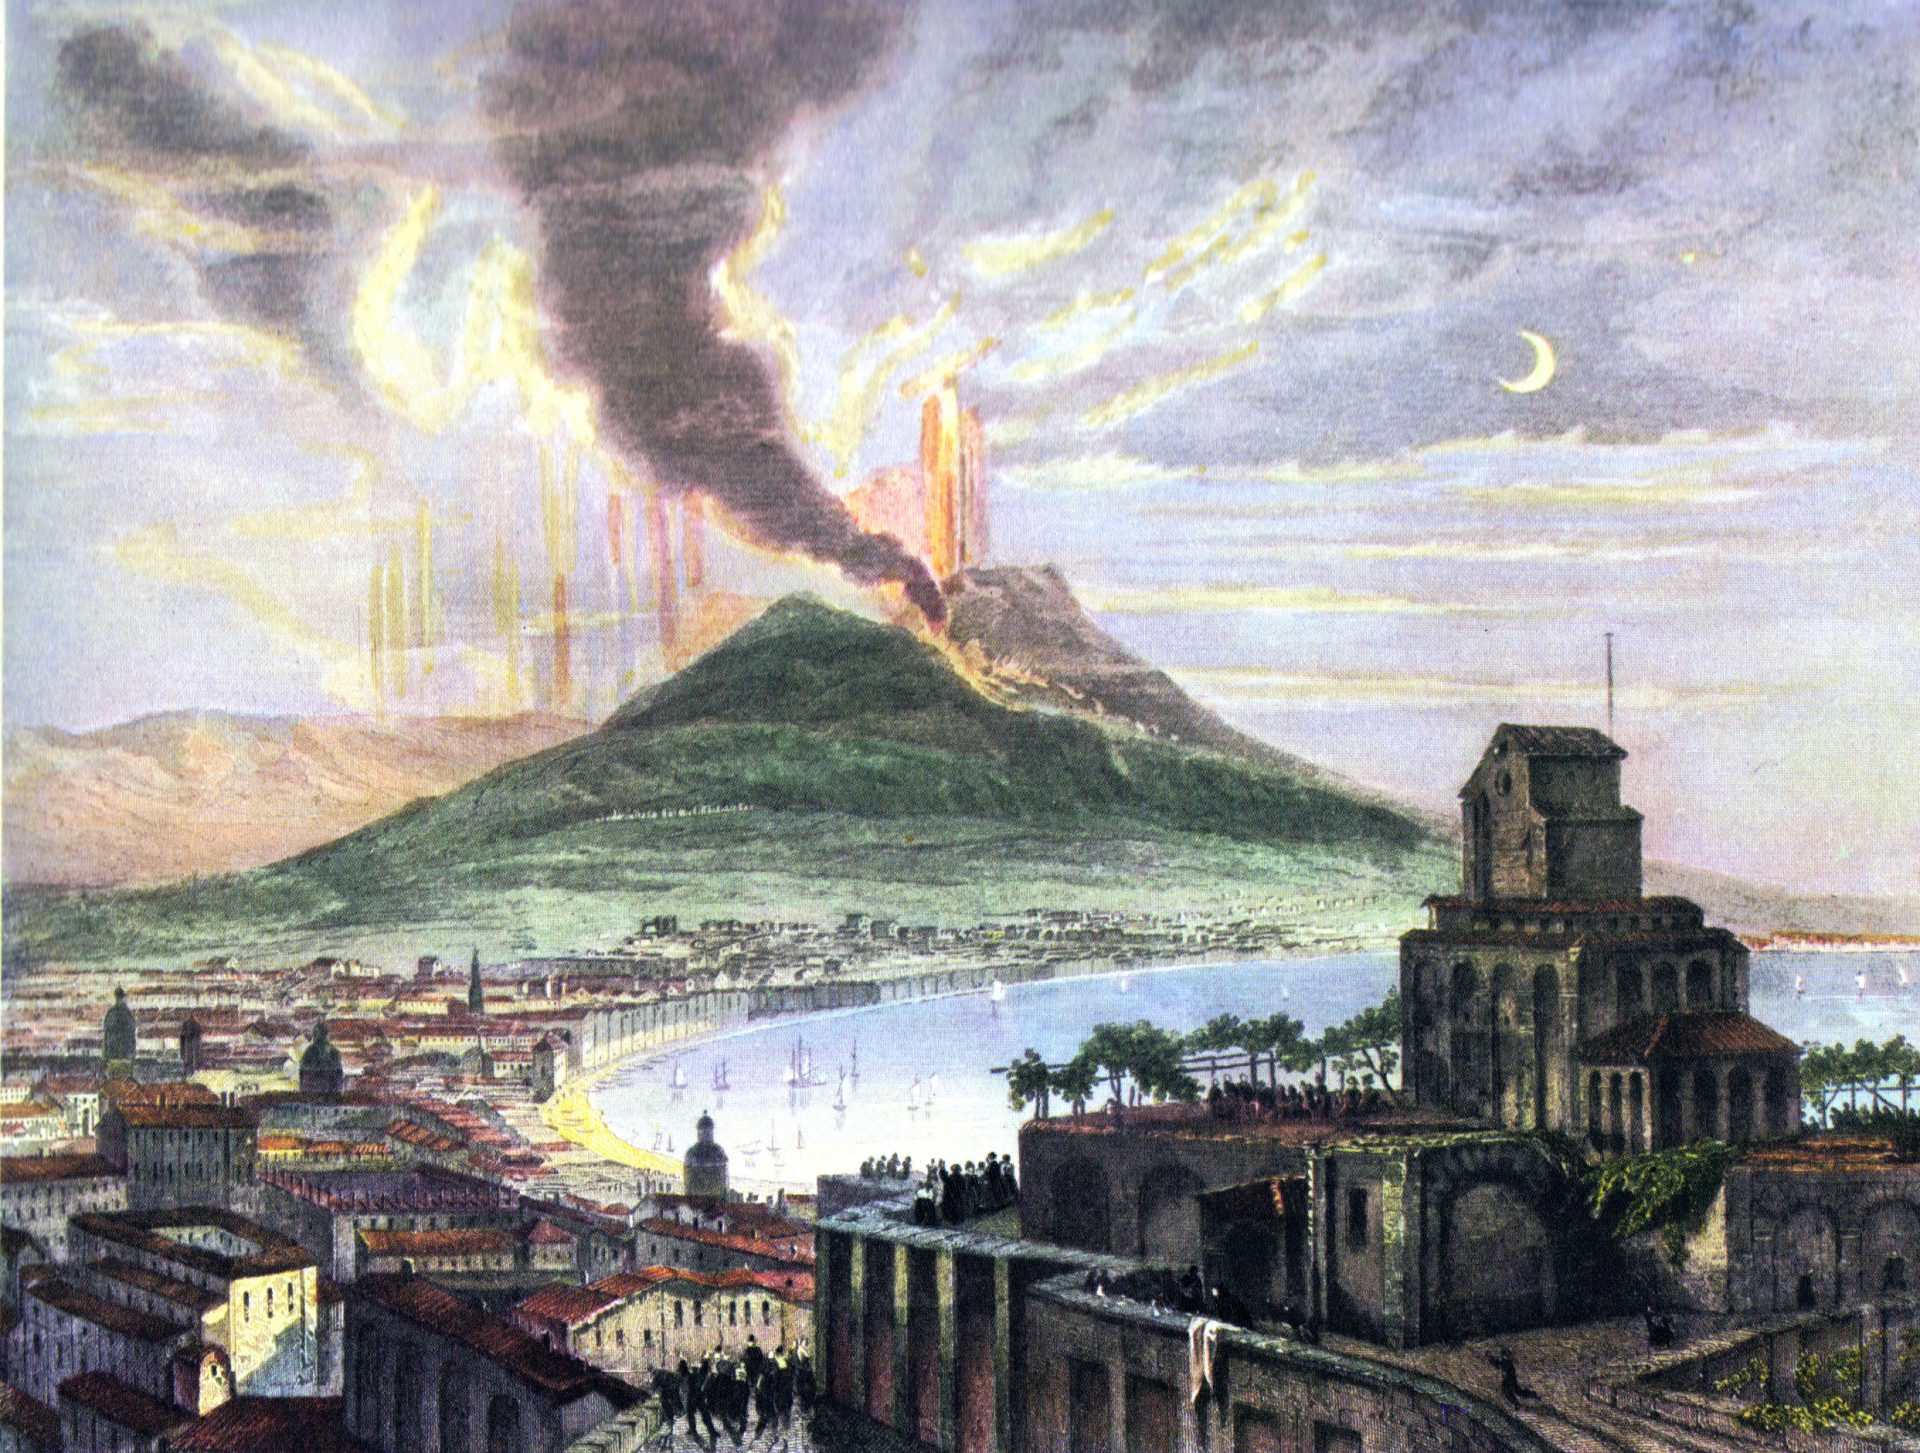 Wulkany – Zapisana historia cywilizacji